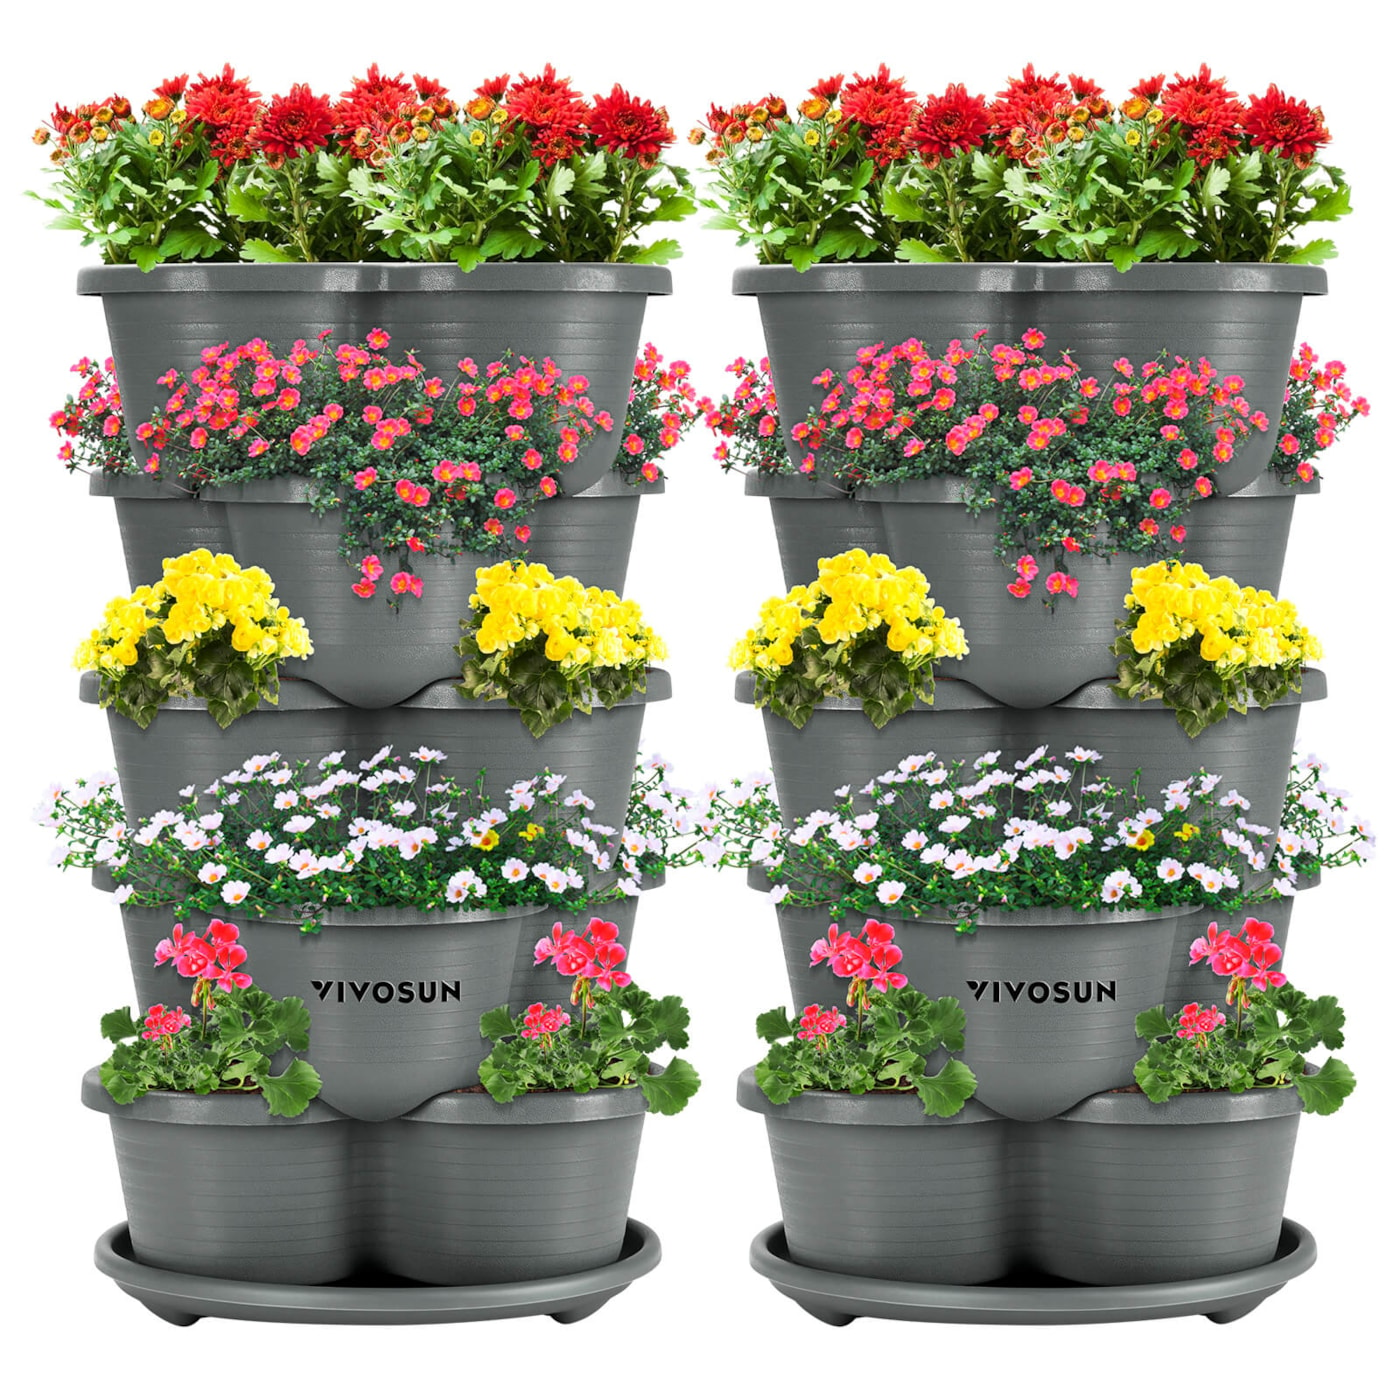 VIVOSUN 5 Tier Vertical Gardening Stackable Planter for Strawberries, Flowers, Herbs, Vegetables, 2-Pack